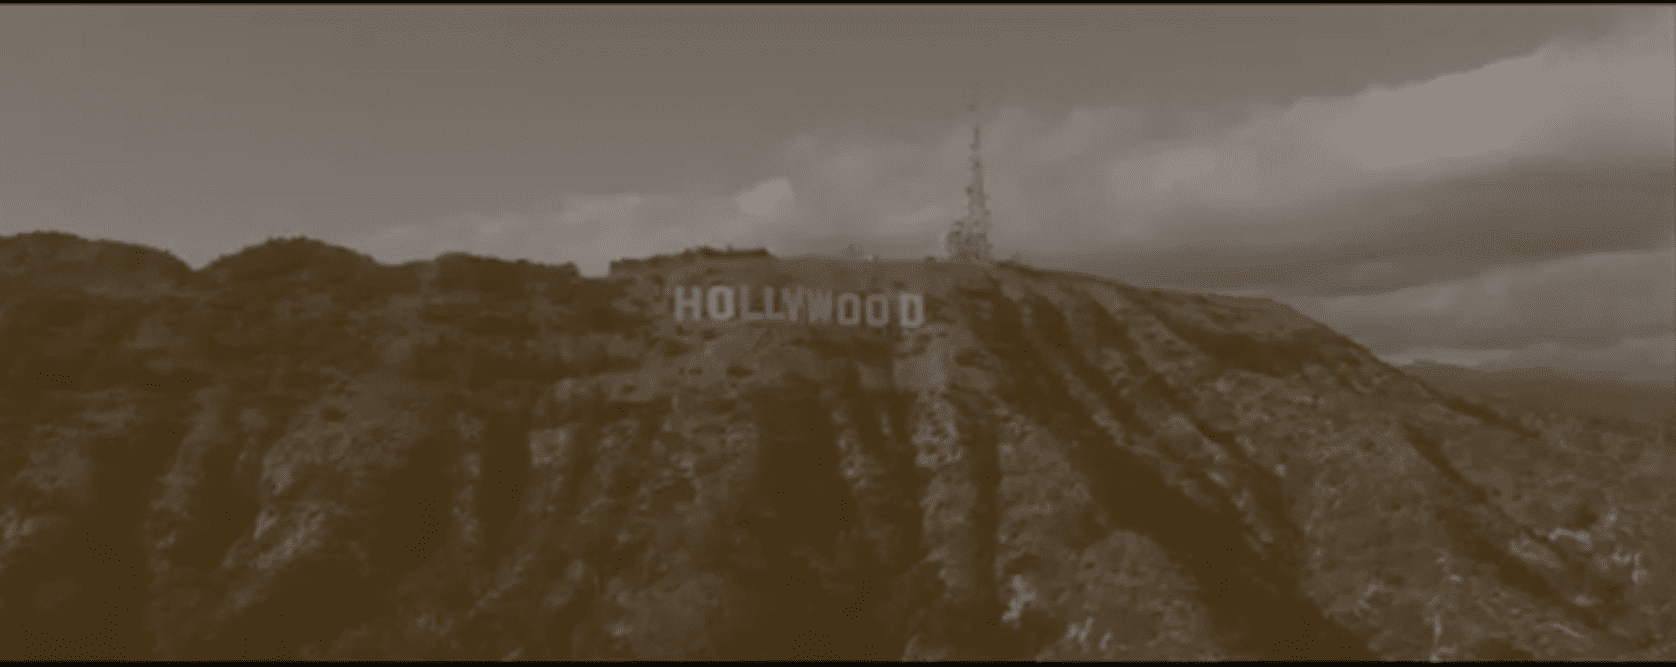 Hollywood's Bleeding Official Video Screenshot